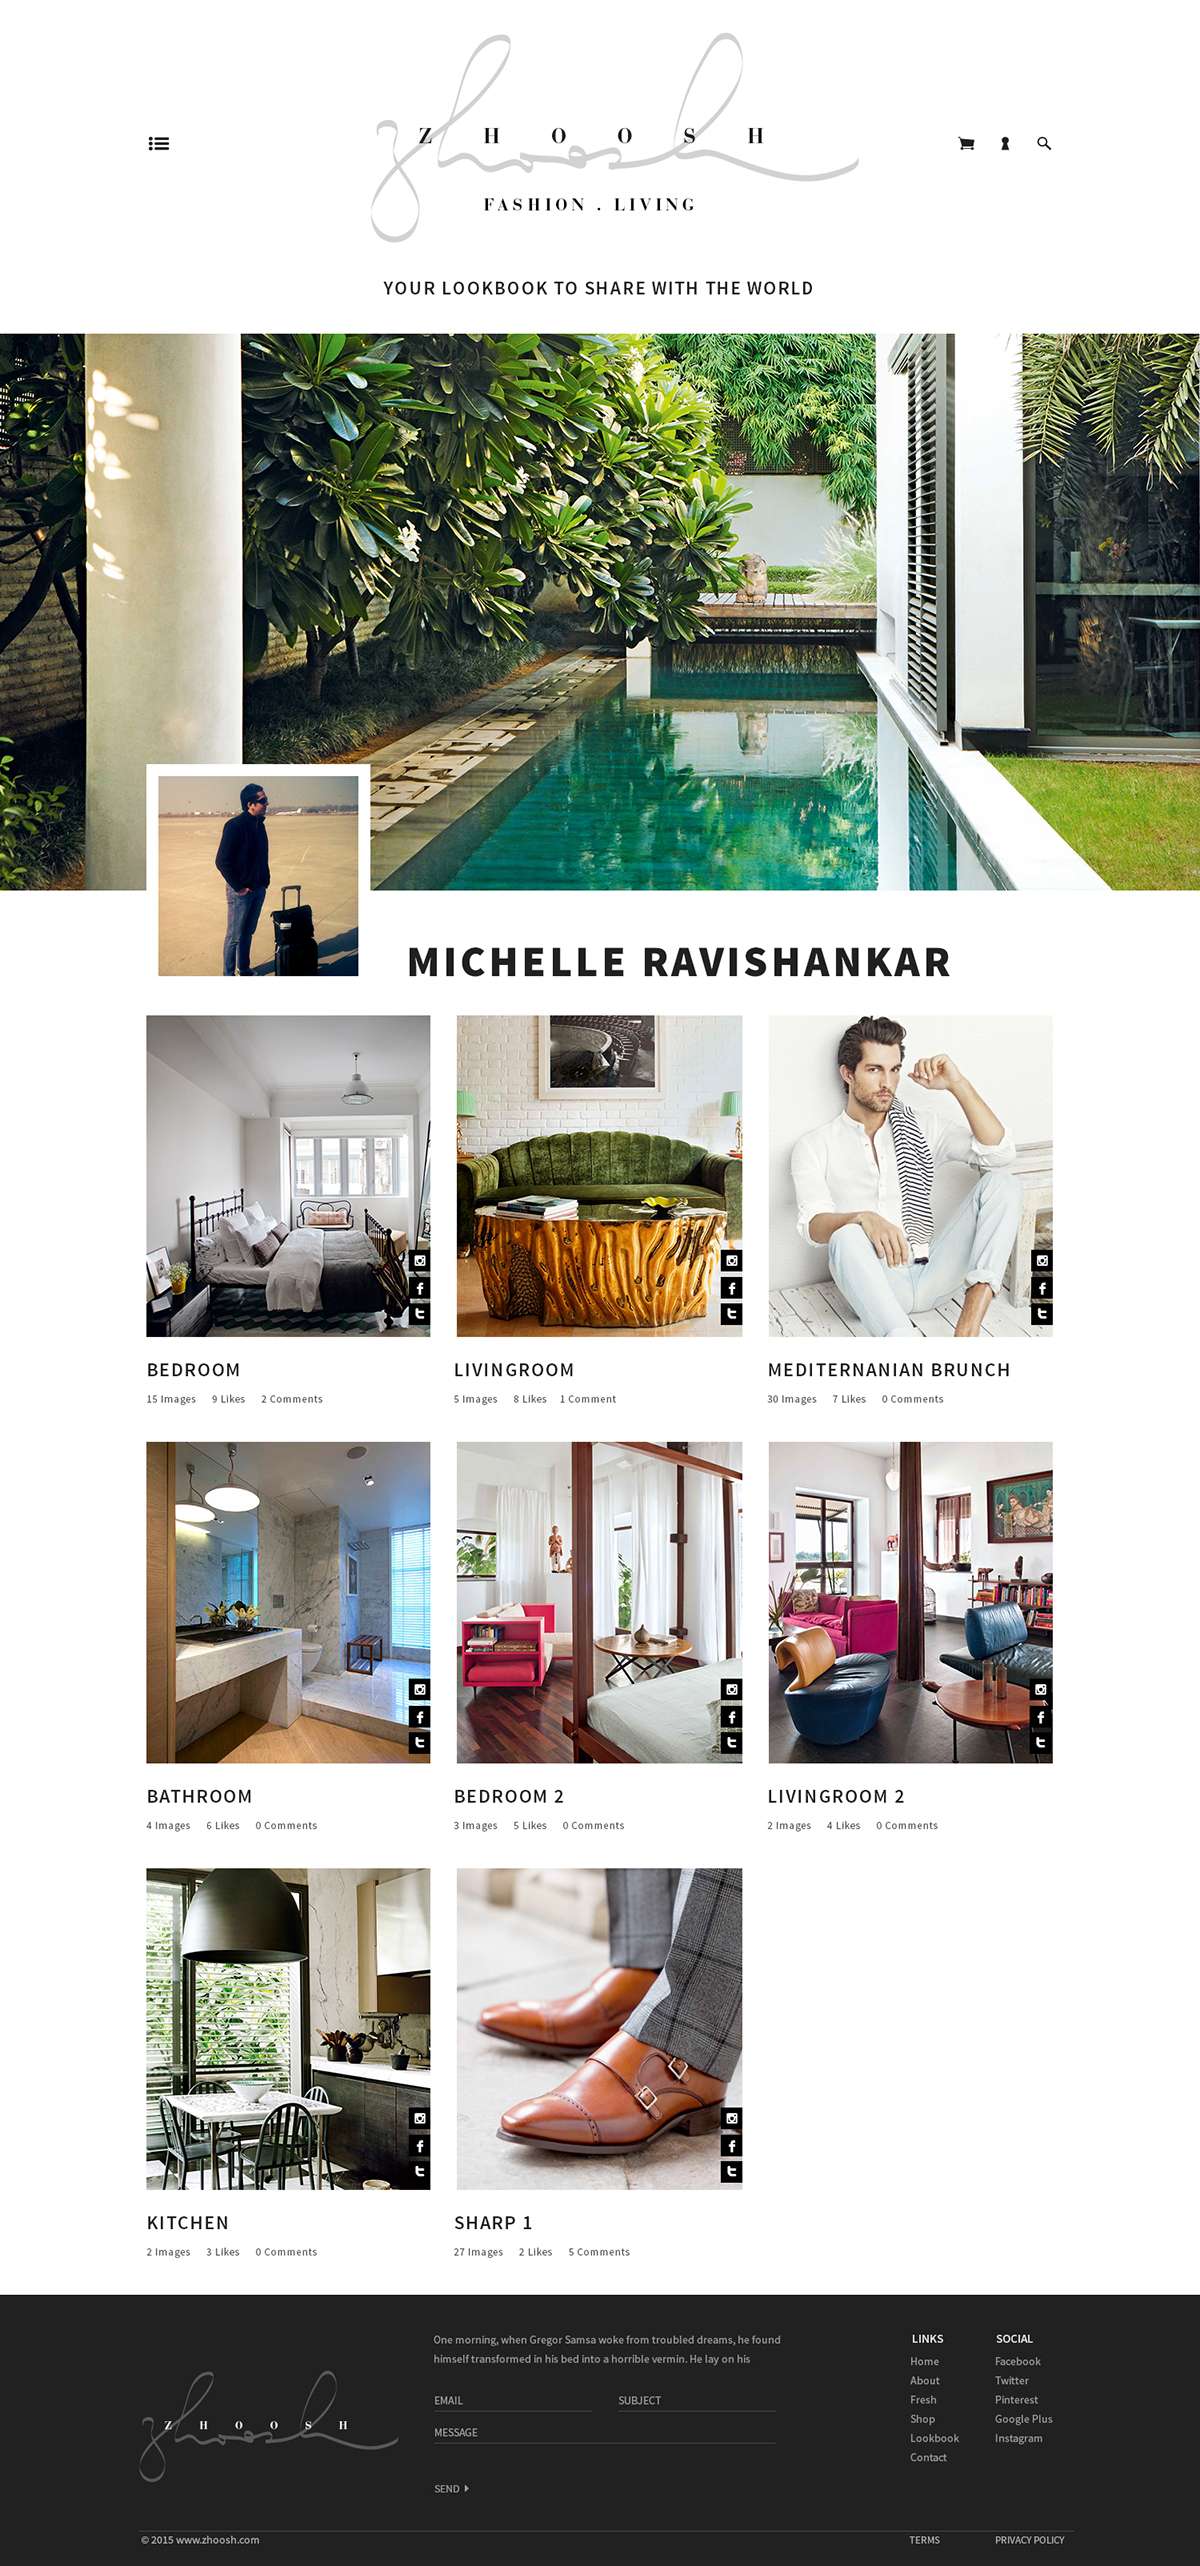 Beautiful interiors design decor home Website